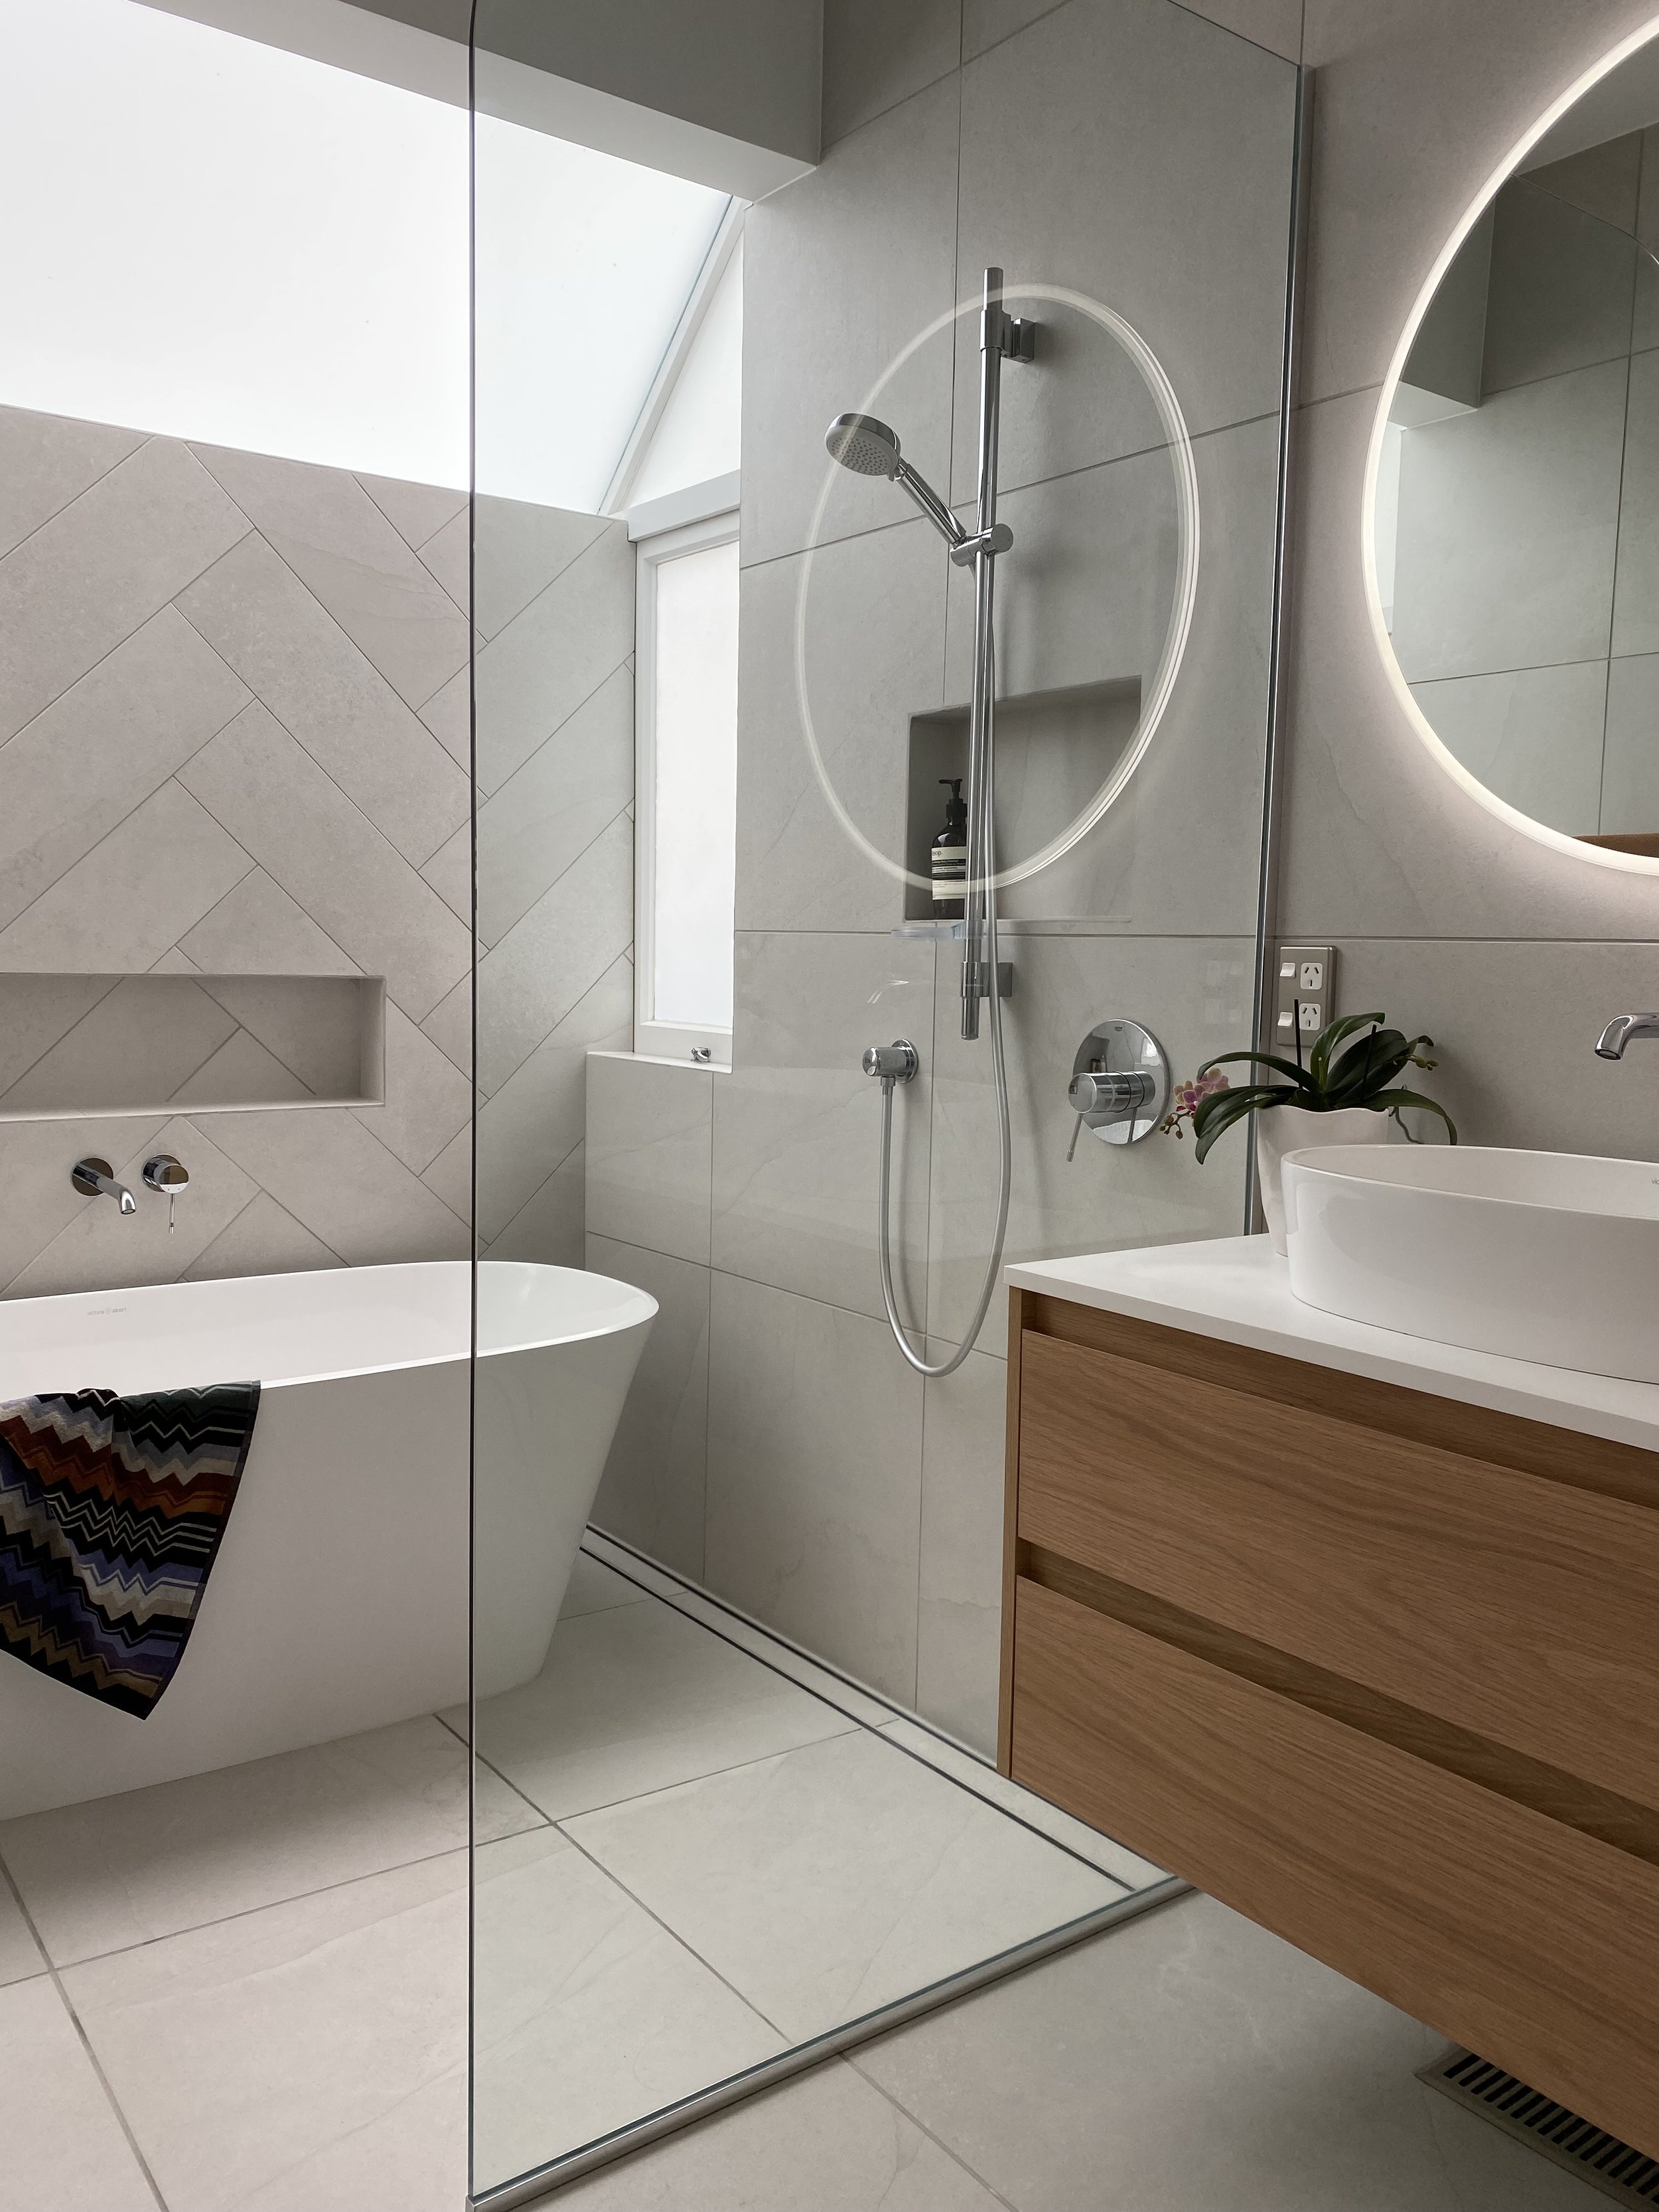 Bathroom renovation tips — Suzanne Allen Design